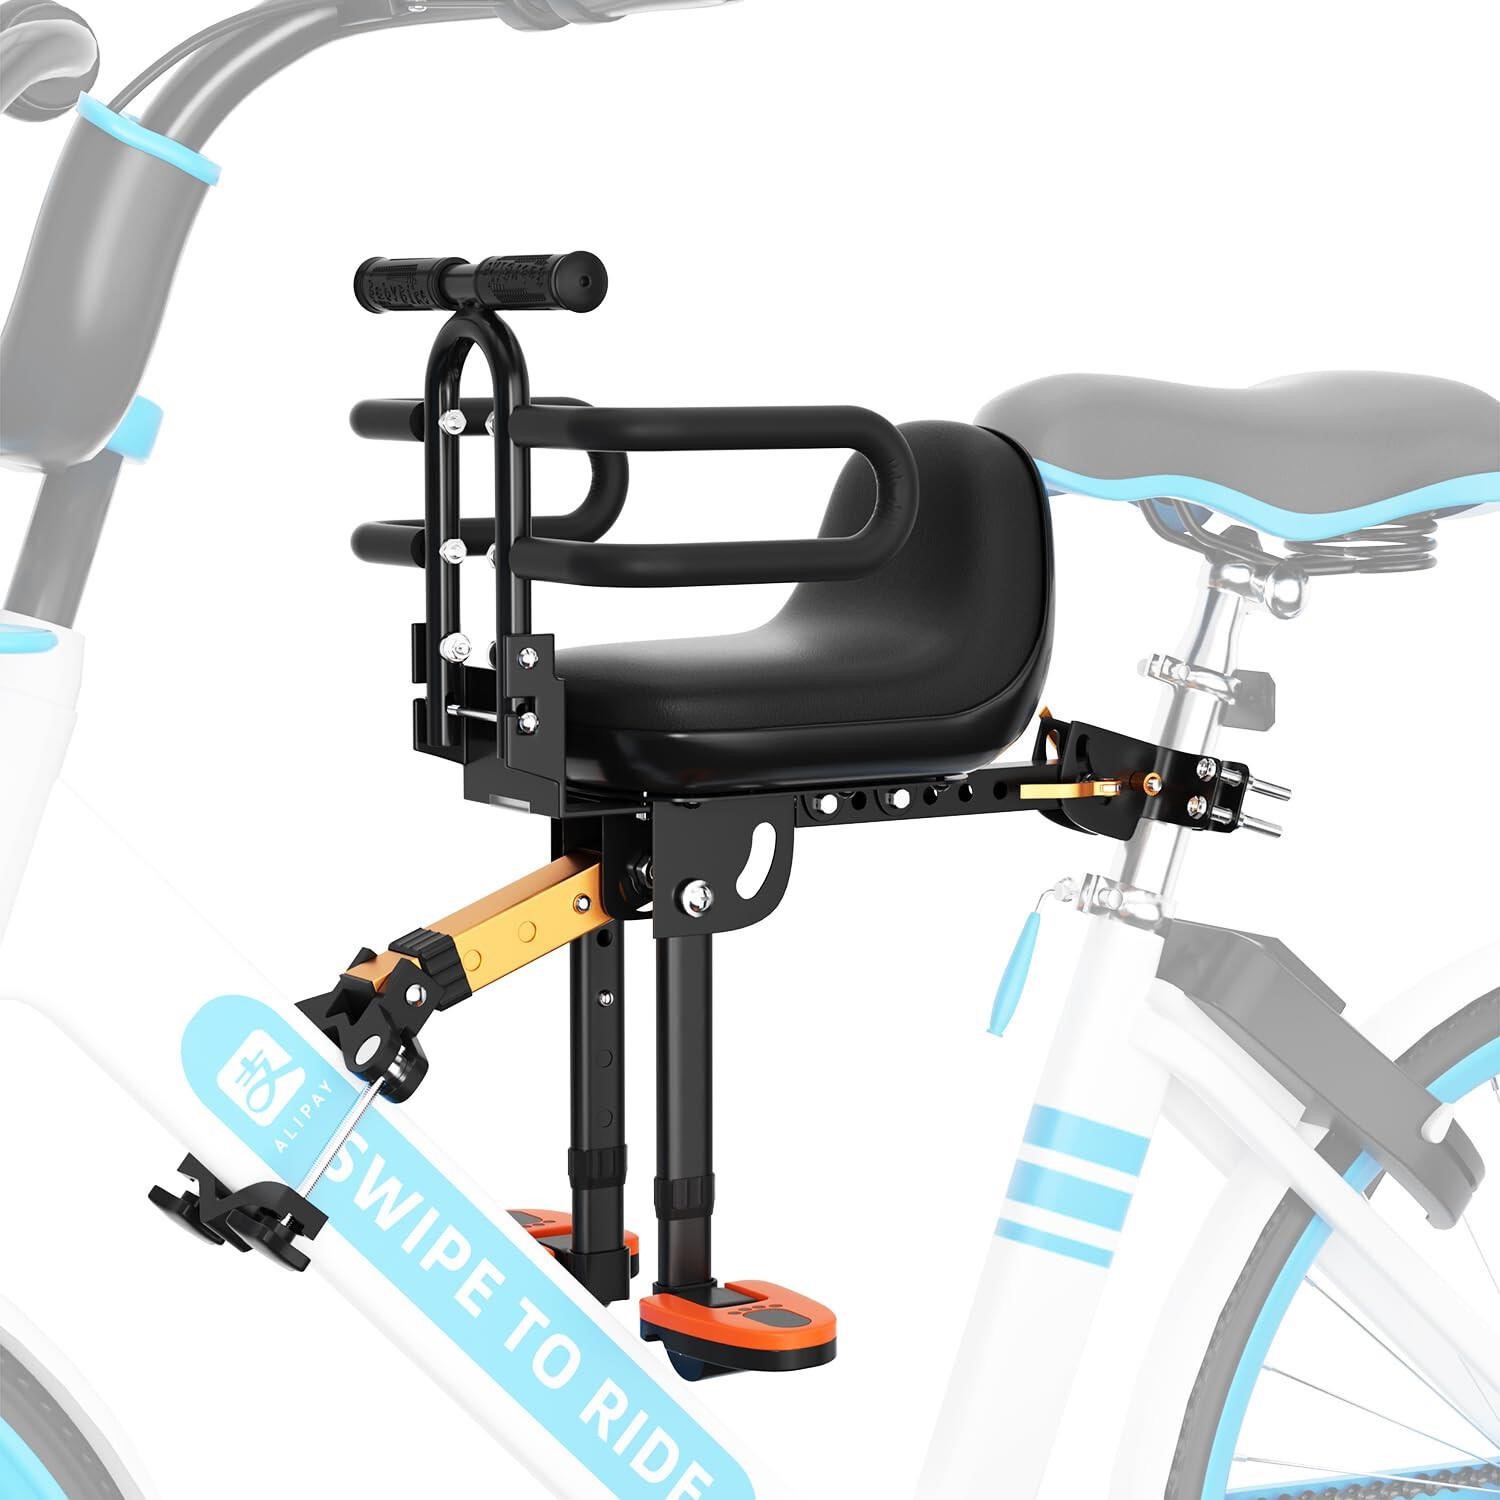 XIEEIX Front Child Bike Seat, Portable Foldable K